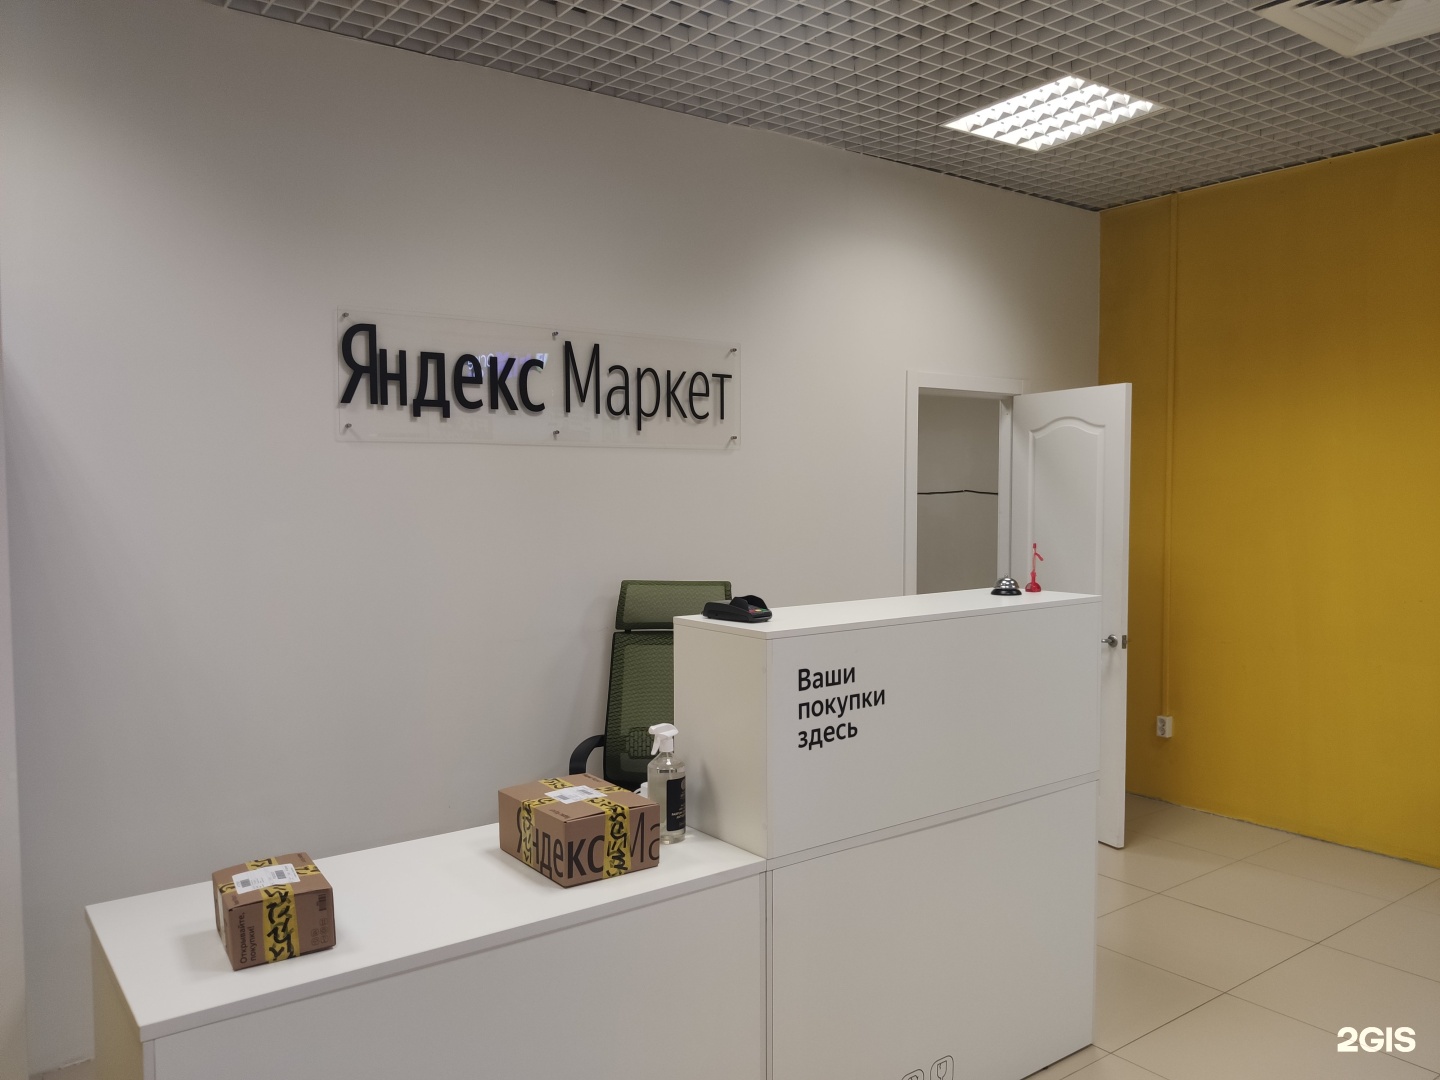 Яндекс Маркет точка выдачи